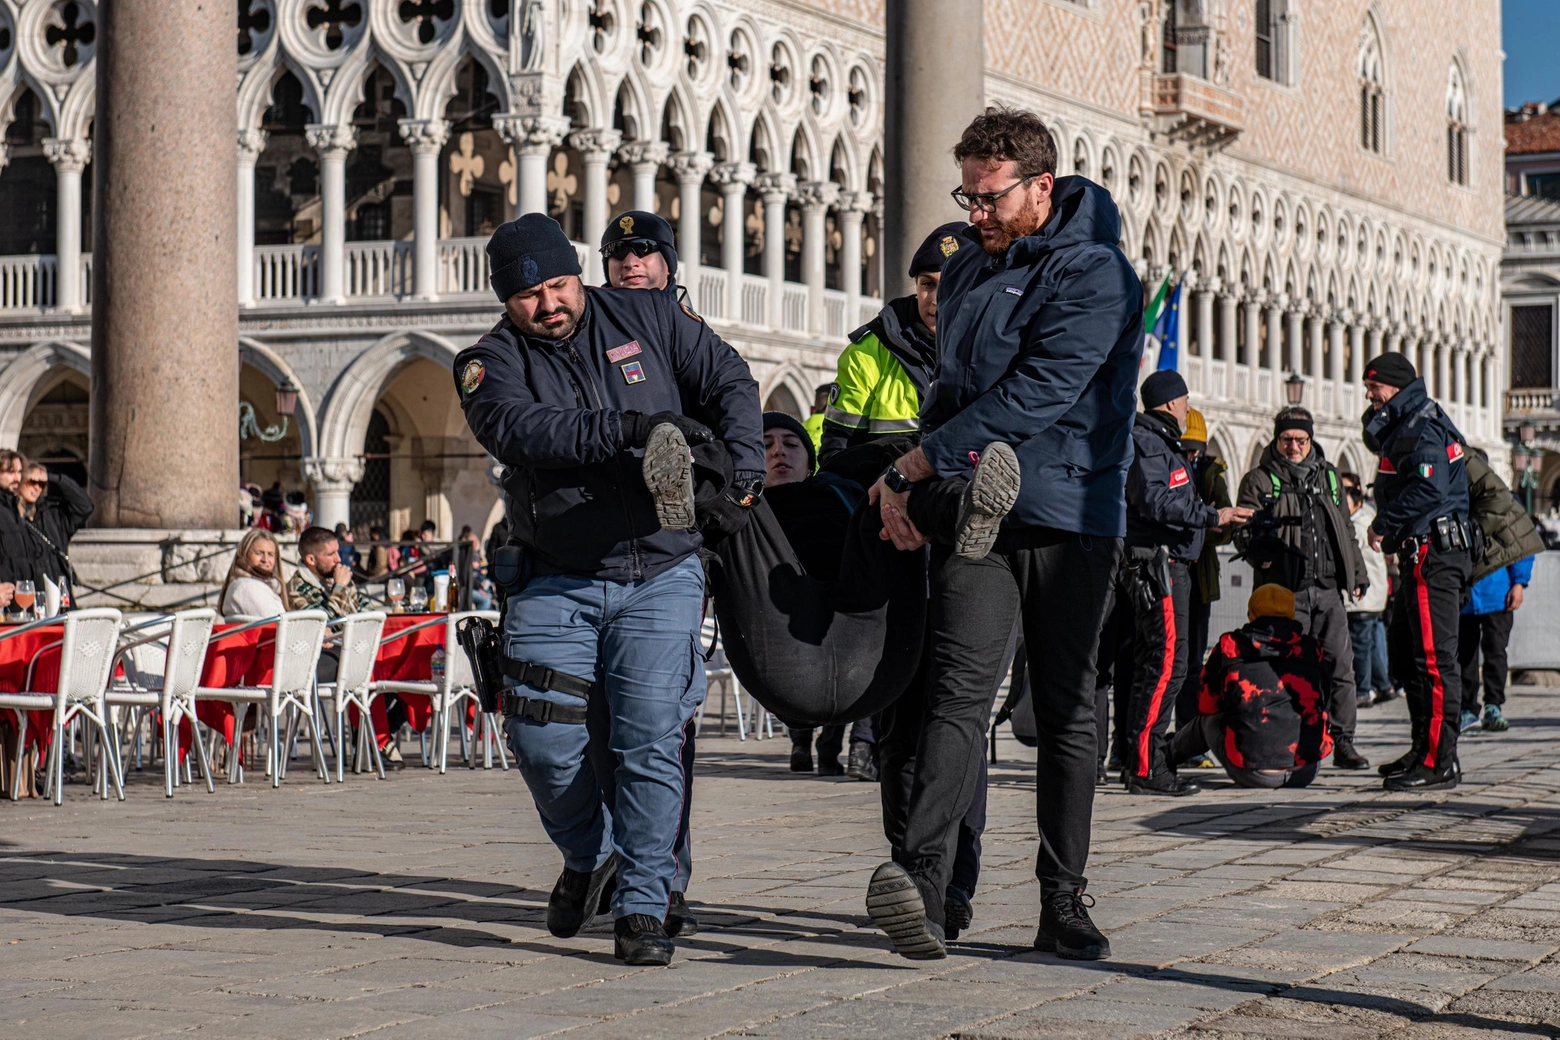 Attivisti clima sparano fango contro Basilica San Marco